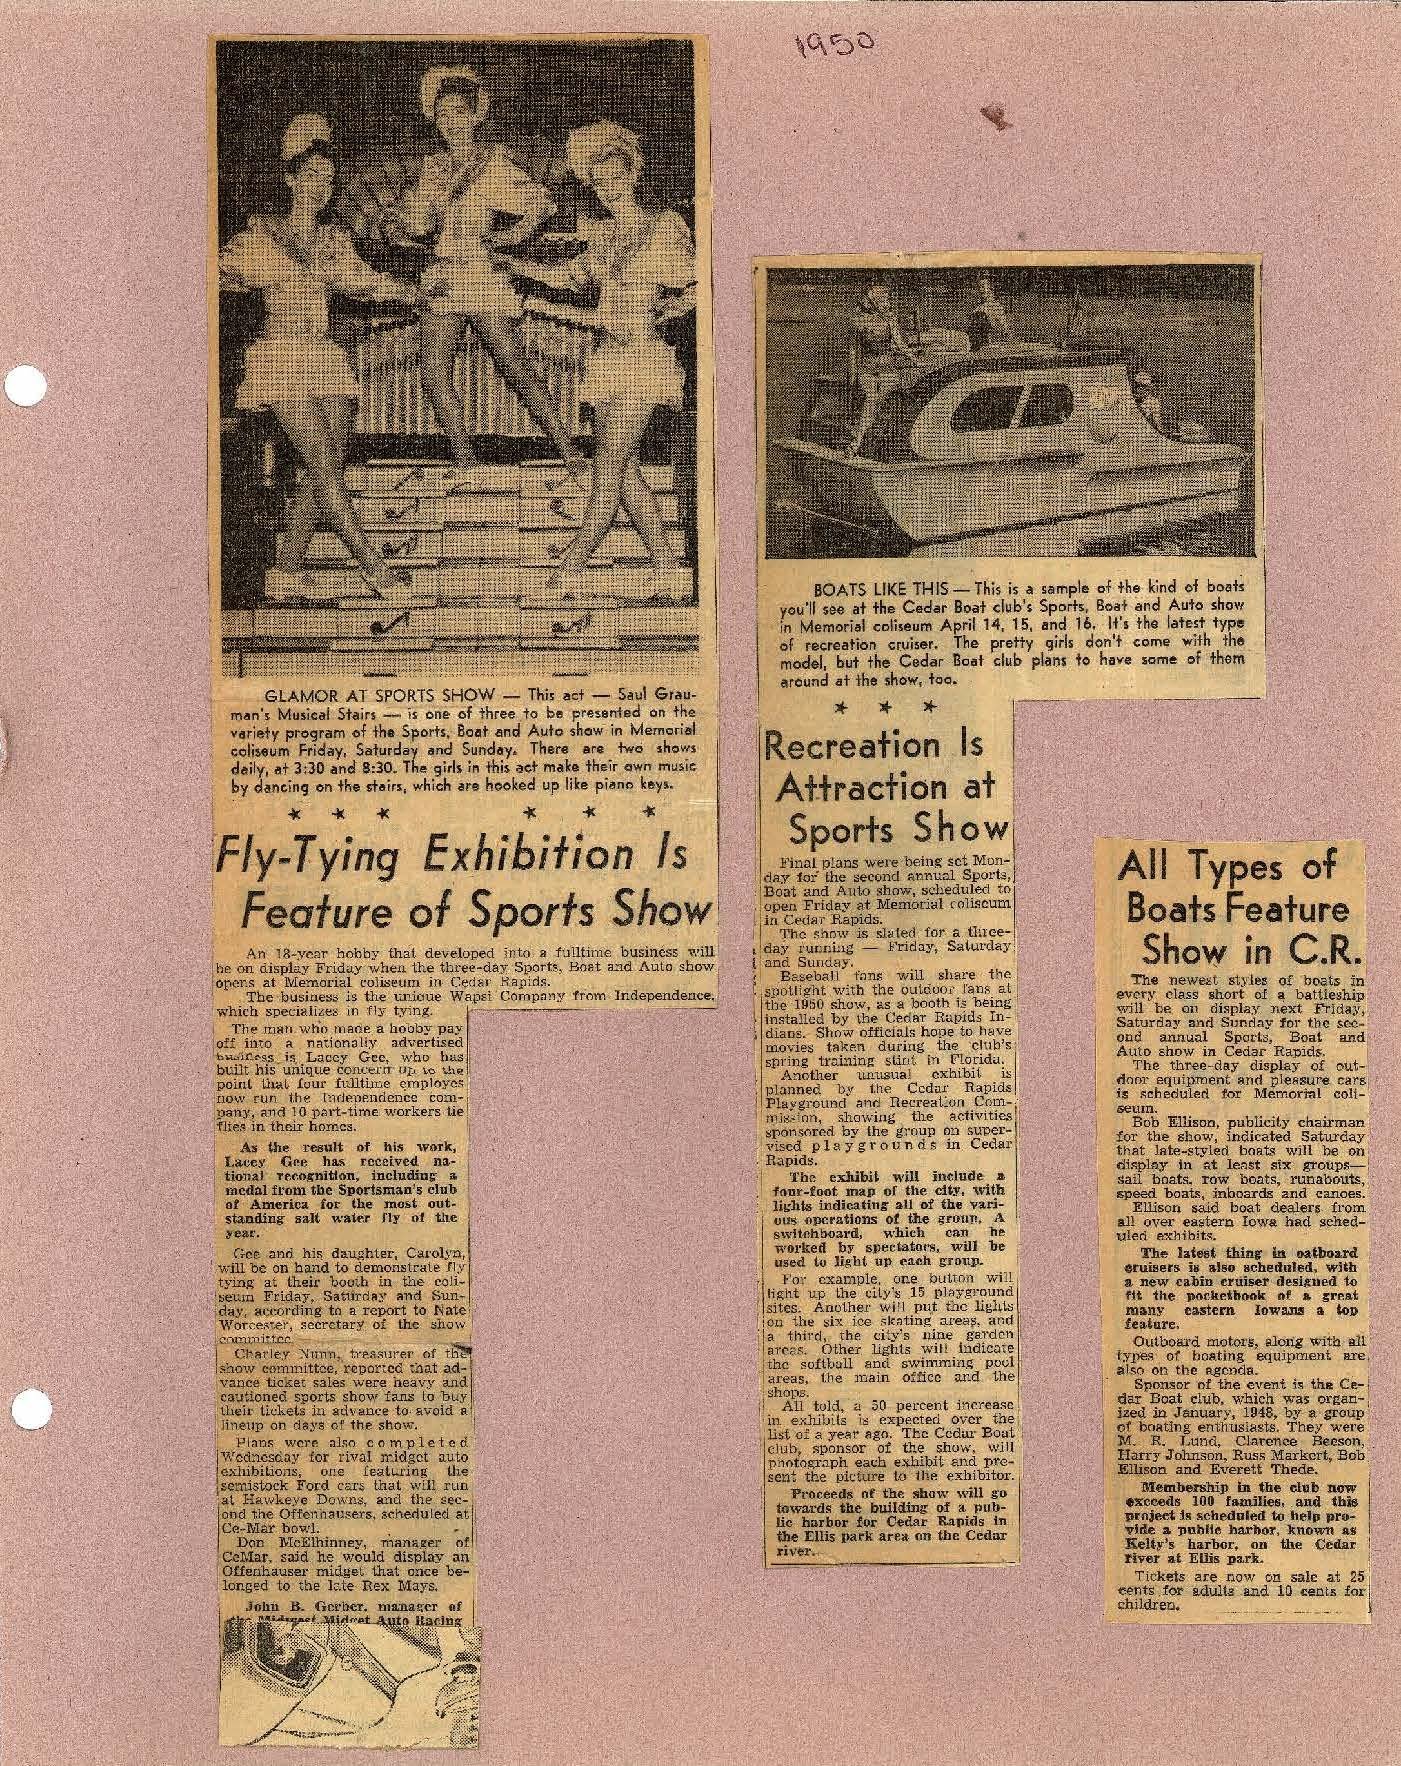 Gazette articles (3) 1950 regarding Boat and sports show